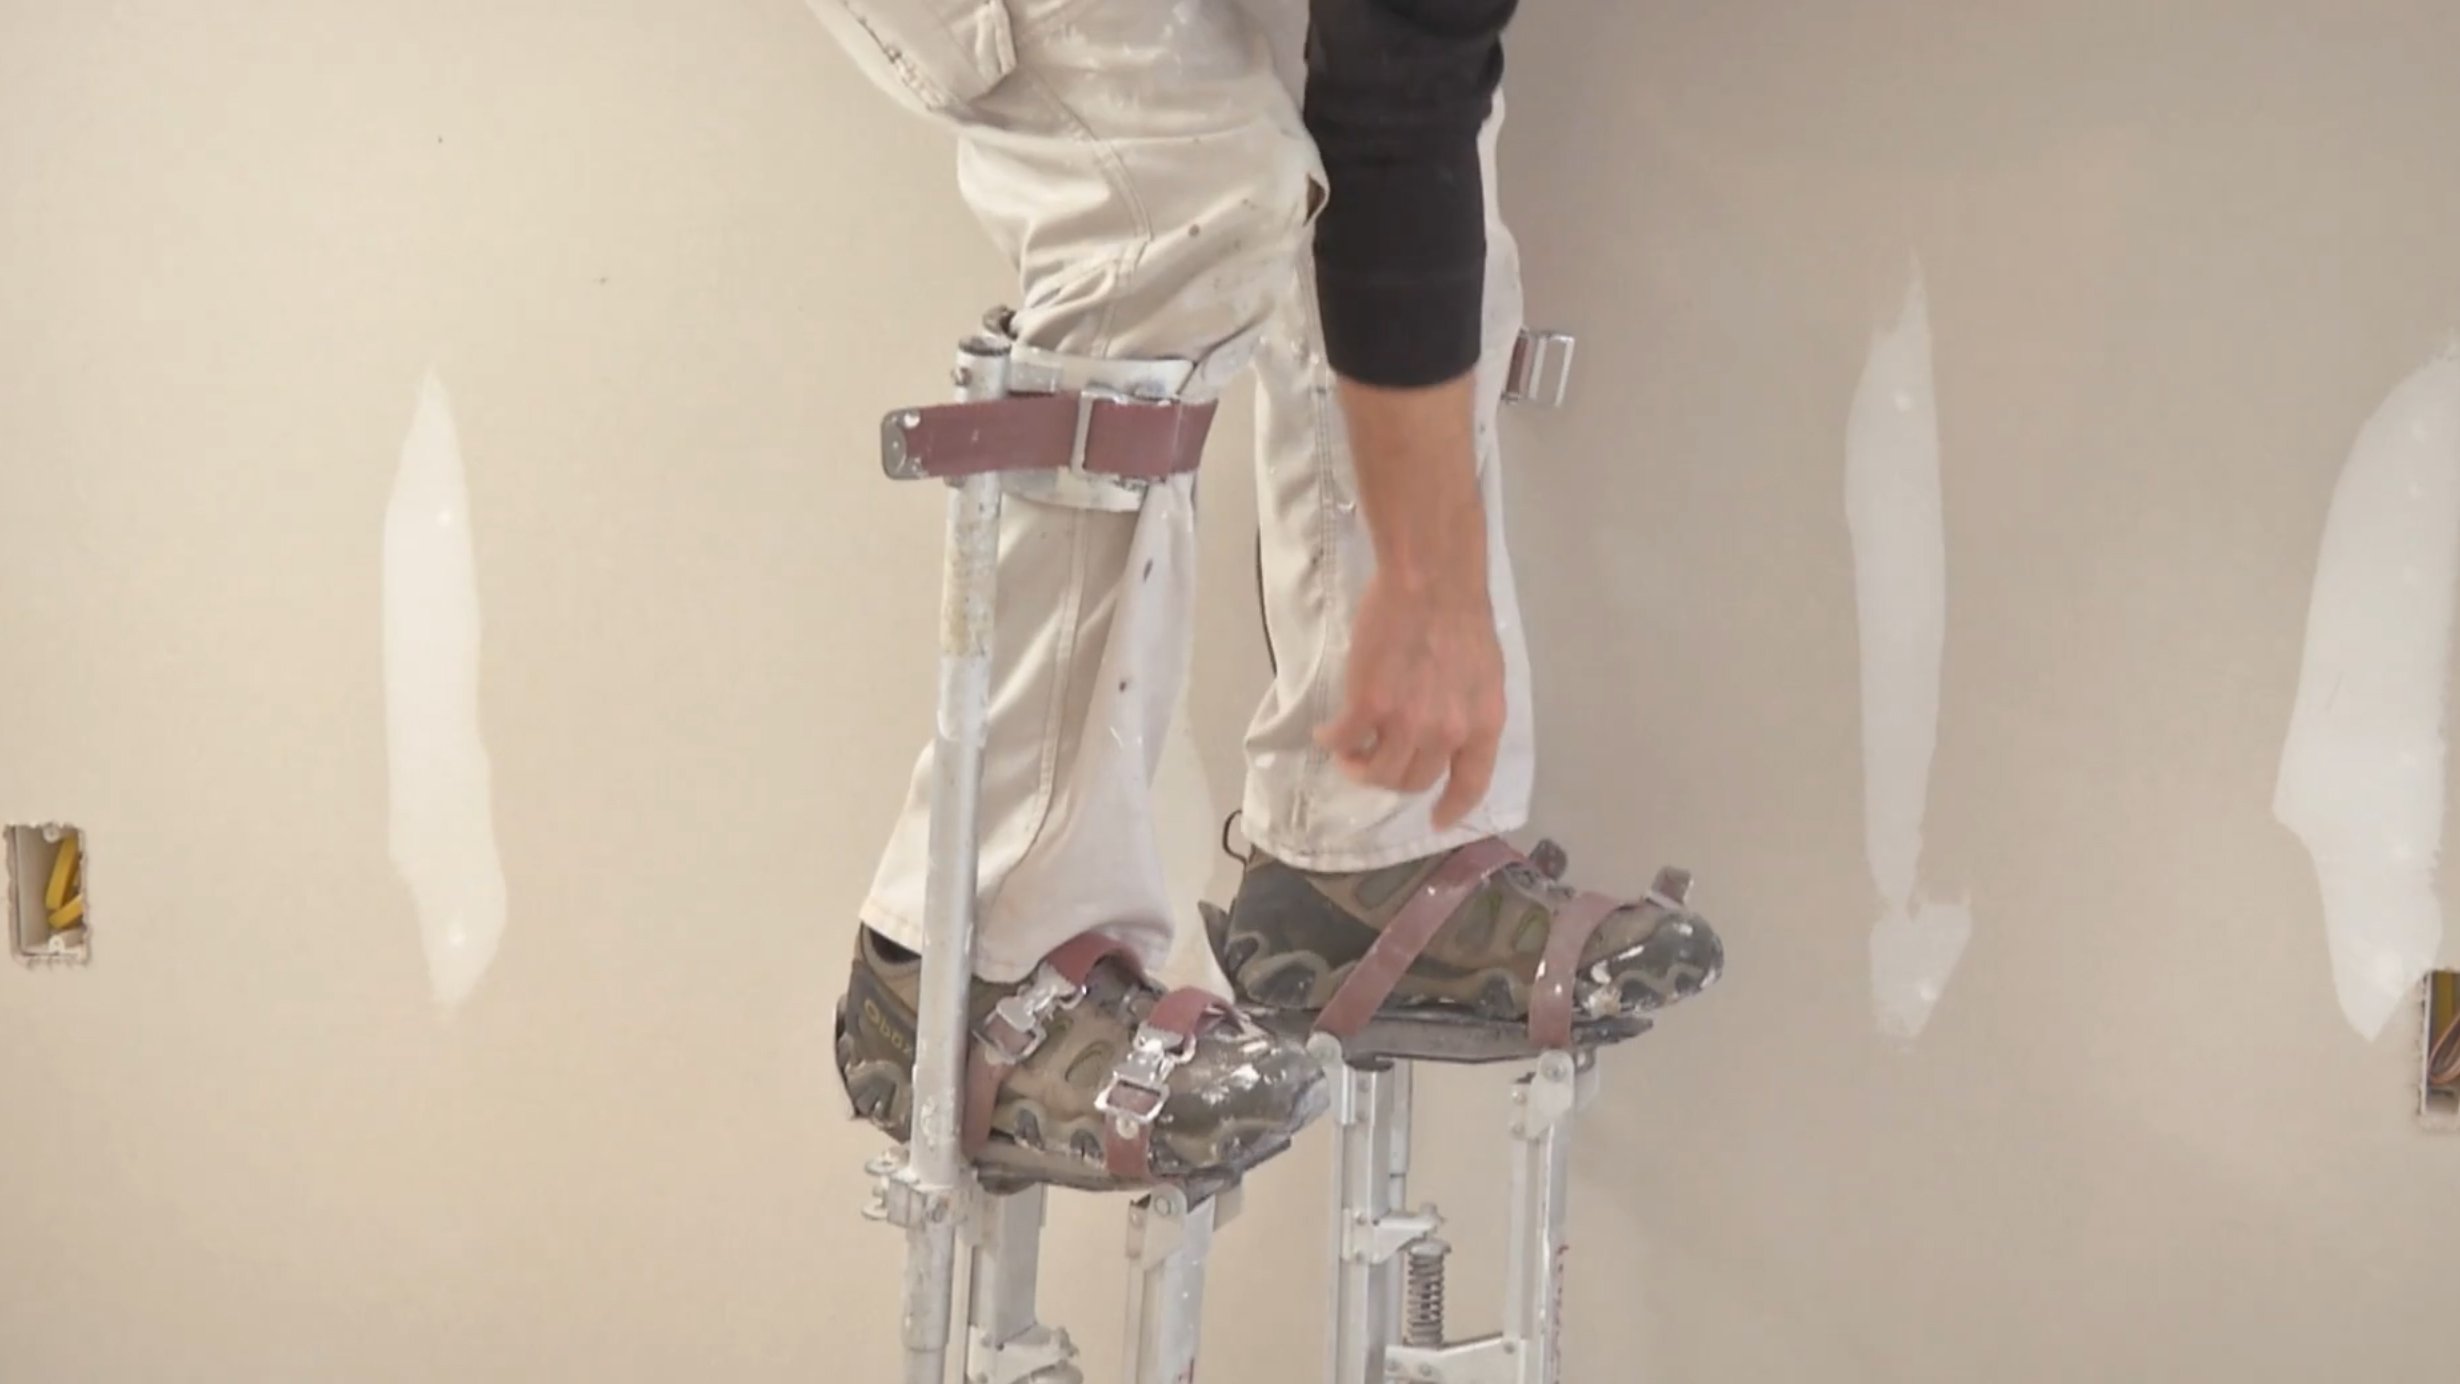 Myron climbing into a pair of metal stilts